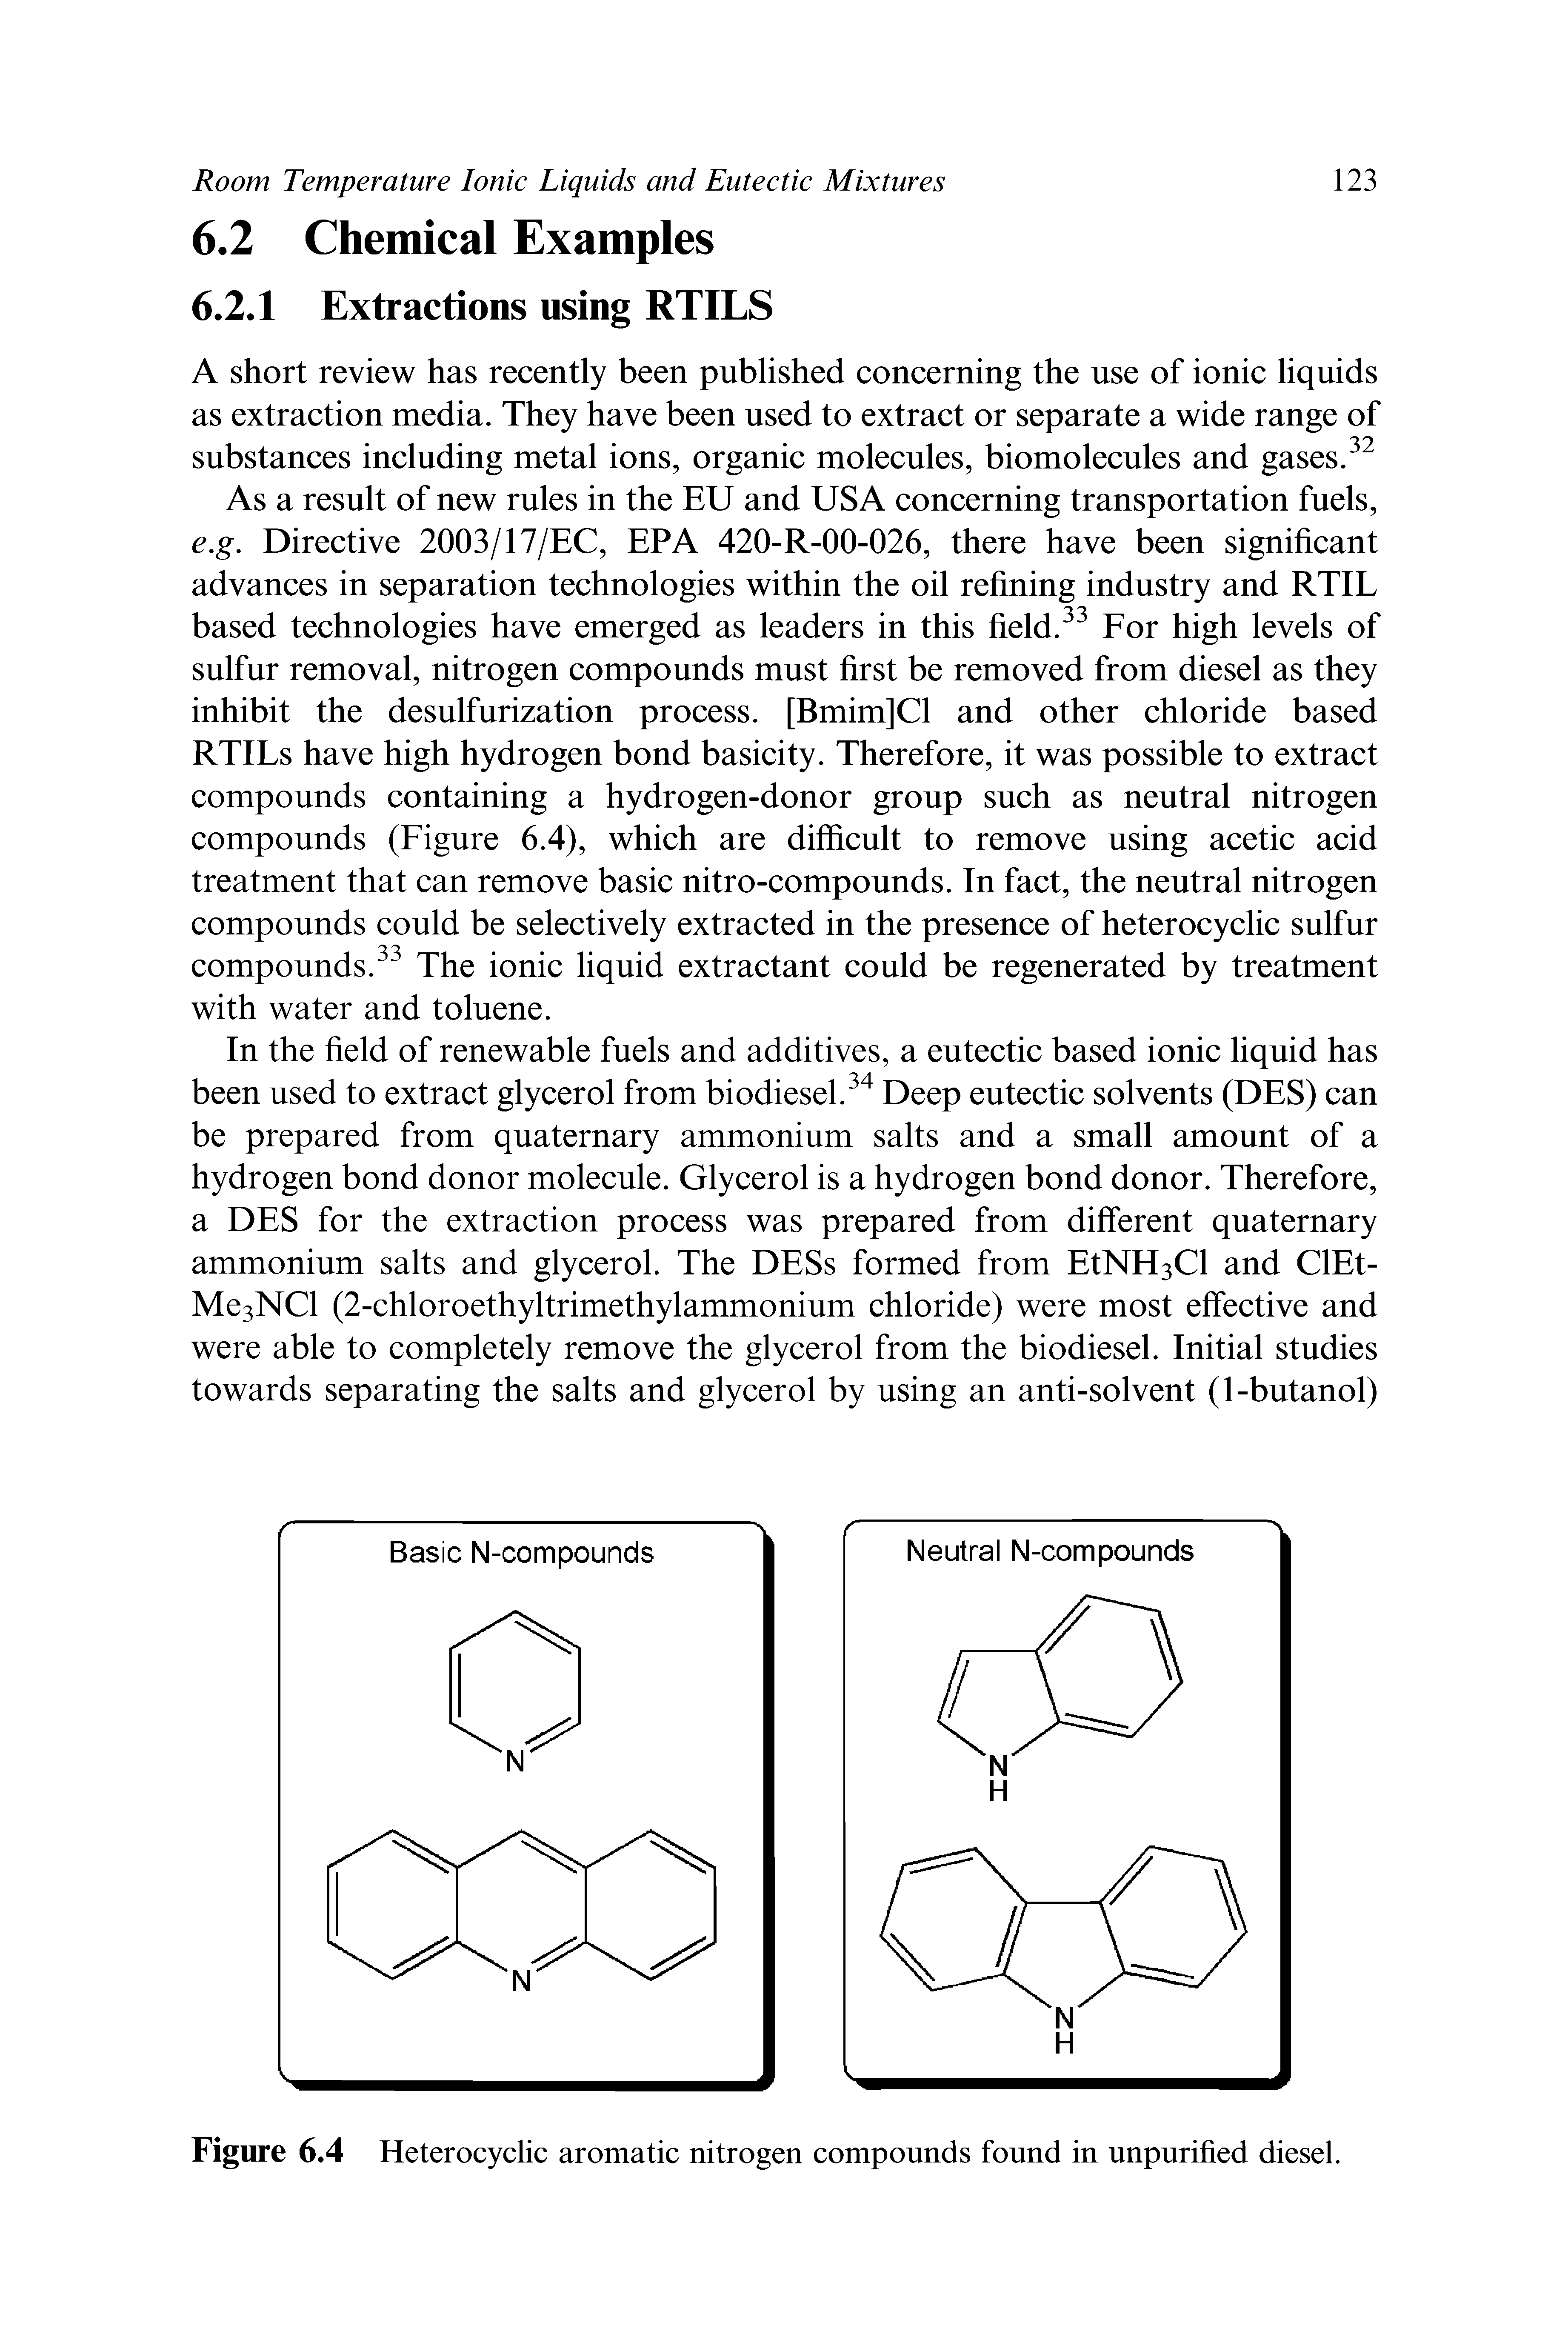 Figure 6.4 Heterocyclic aromatic nitrogen compounds found in unpurified diesel.